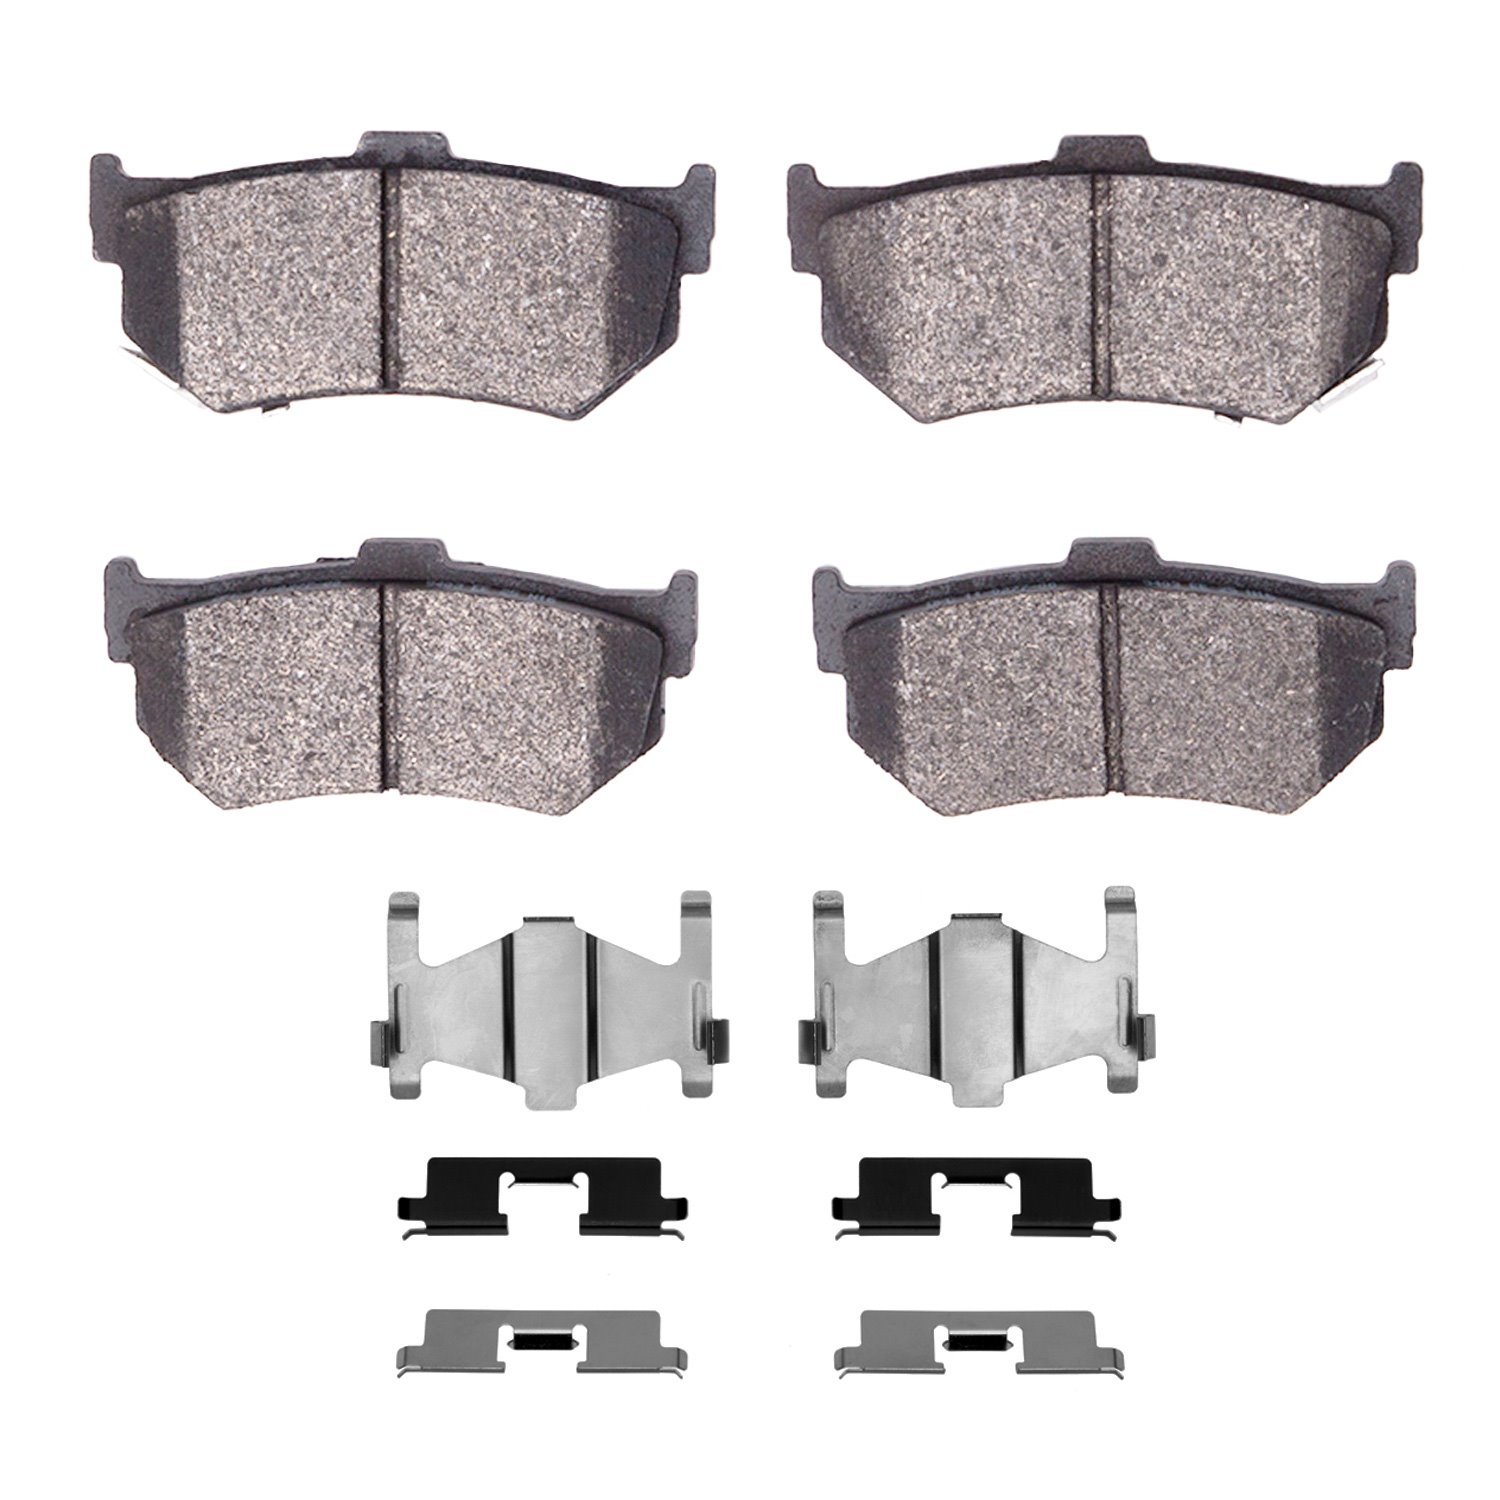 Semi-Metallic Brake Pads & Hardware Kit, 1984-1994 Fits Multiple Makes/Models, Position: Rear